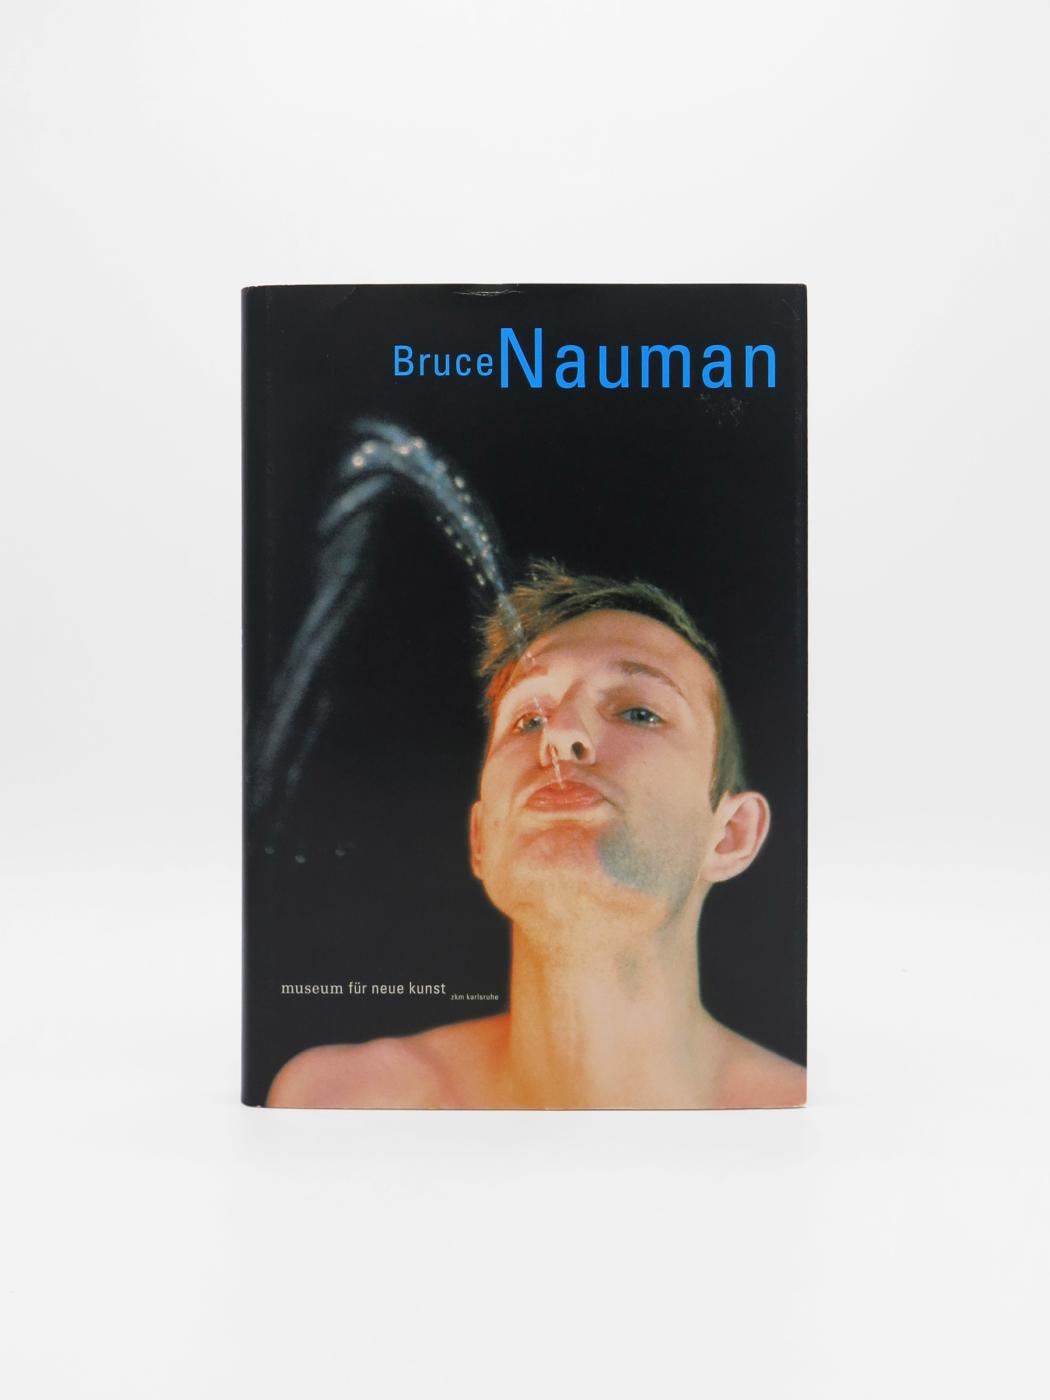 Bruce Nauman, Museum fur neue kunst